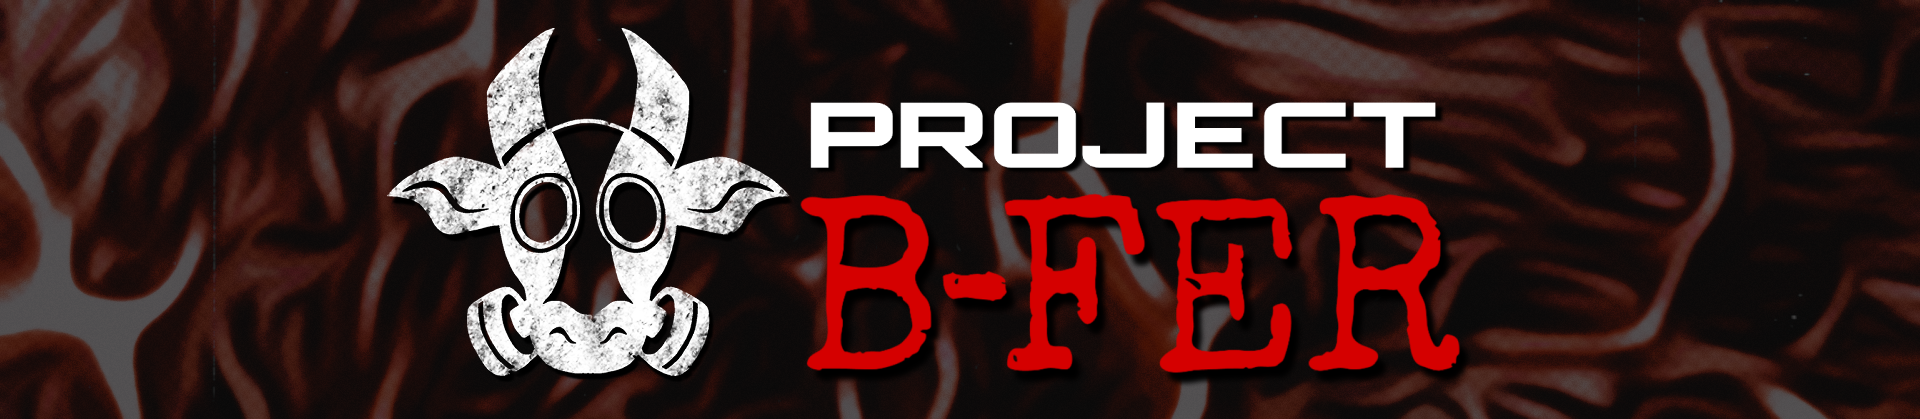 Project B-FER